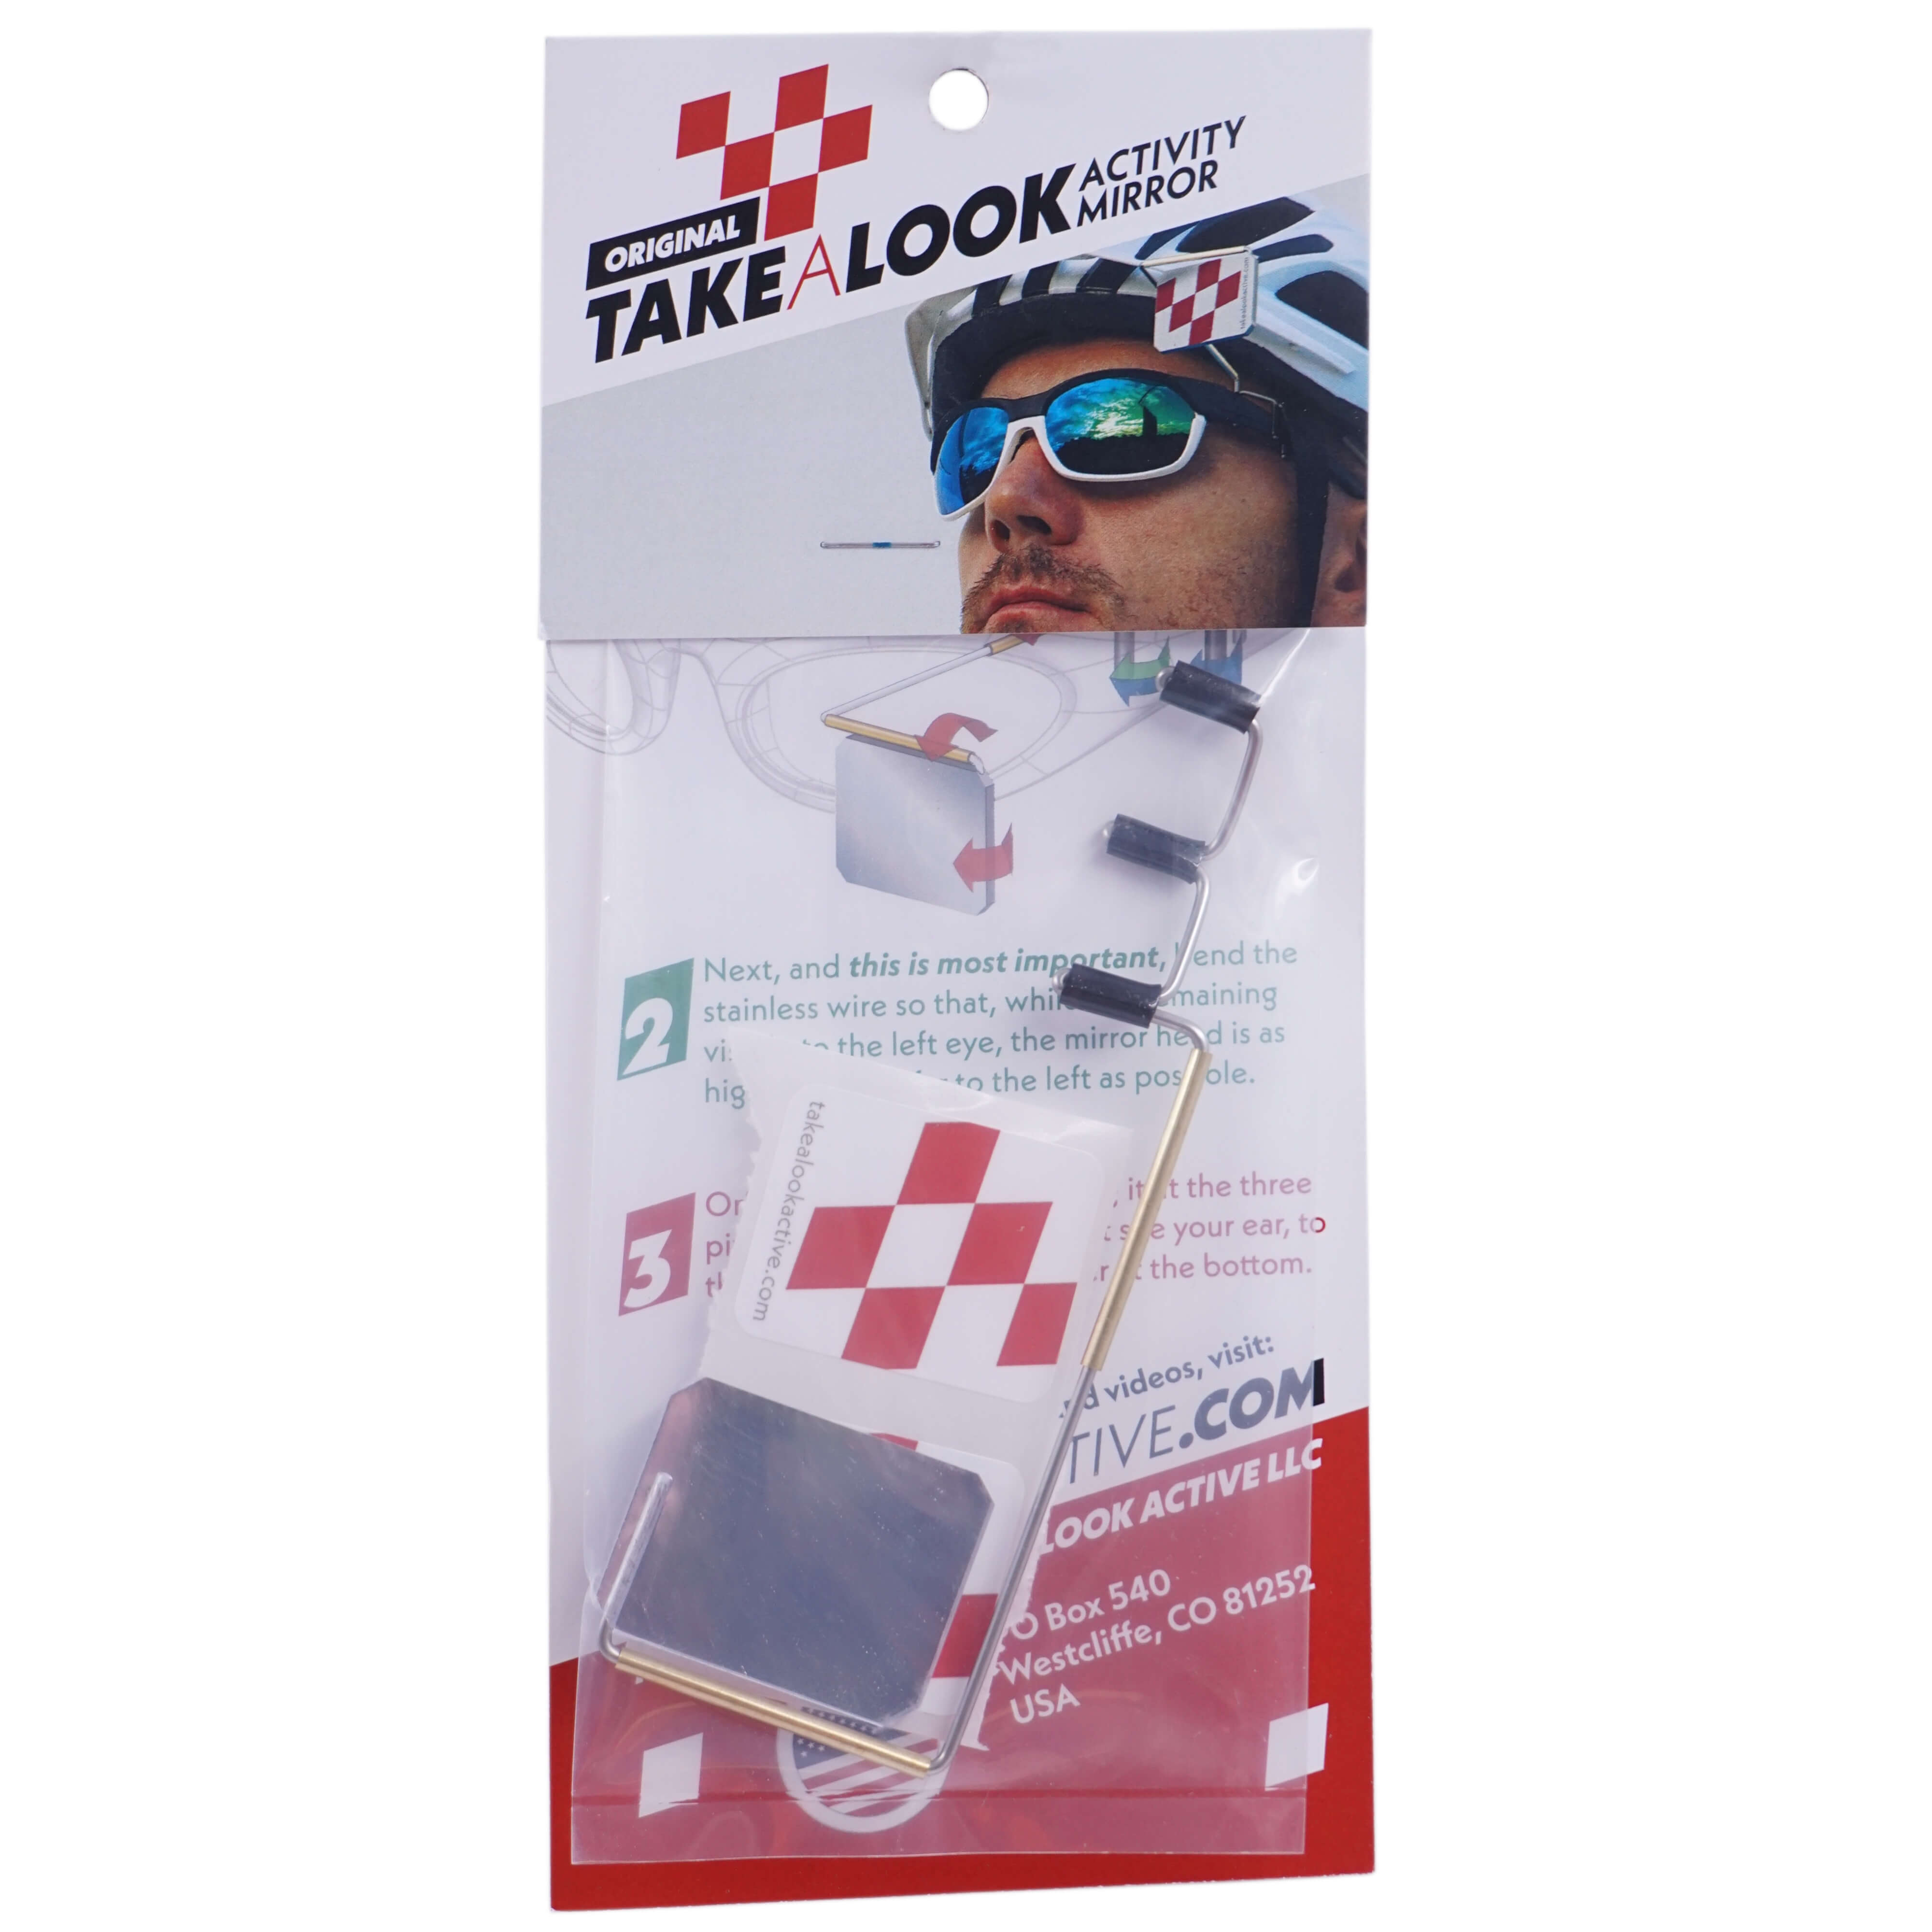 Take-a-Look Compact Version Visor Mount Eyeglass Mirror